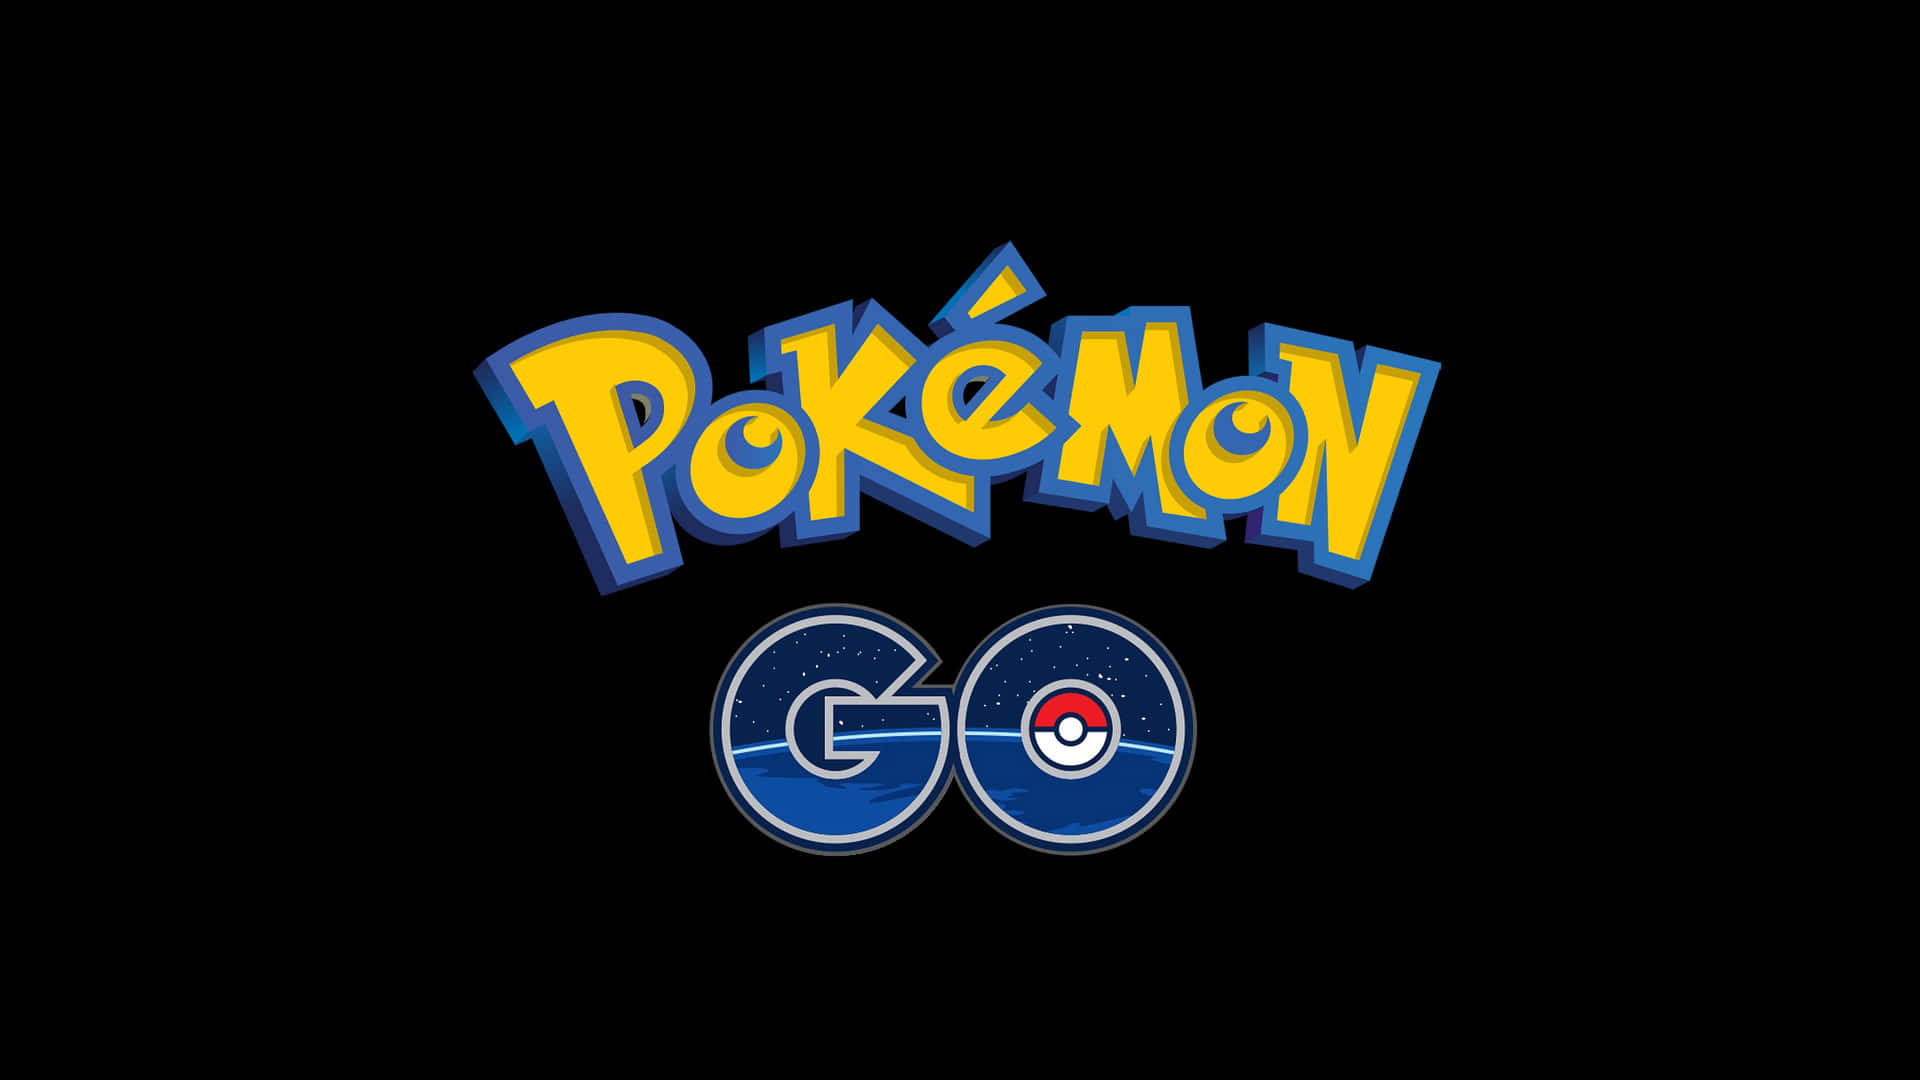 Pokemon Go Logo On A Black Background Wallpaper